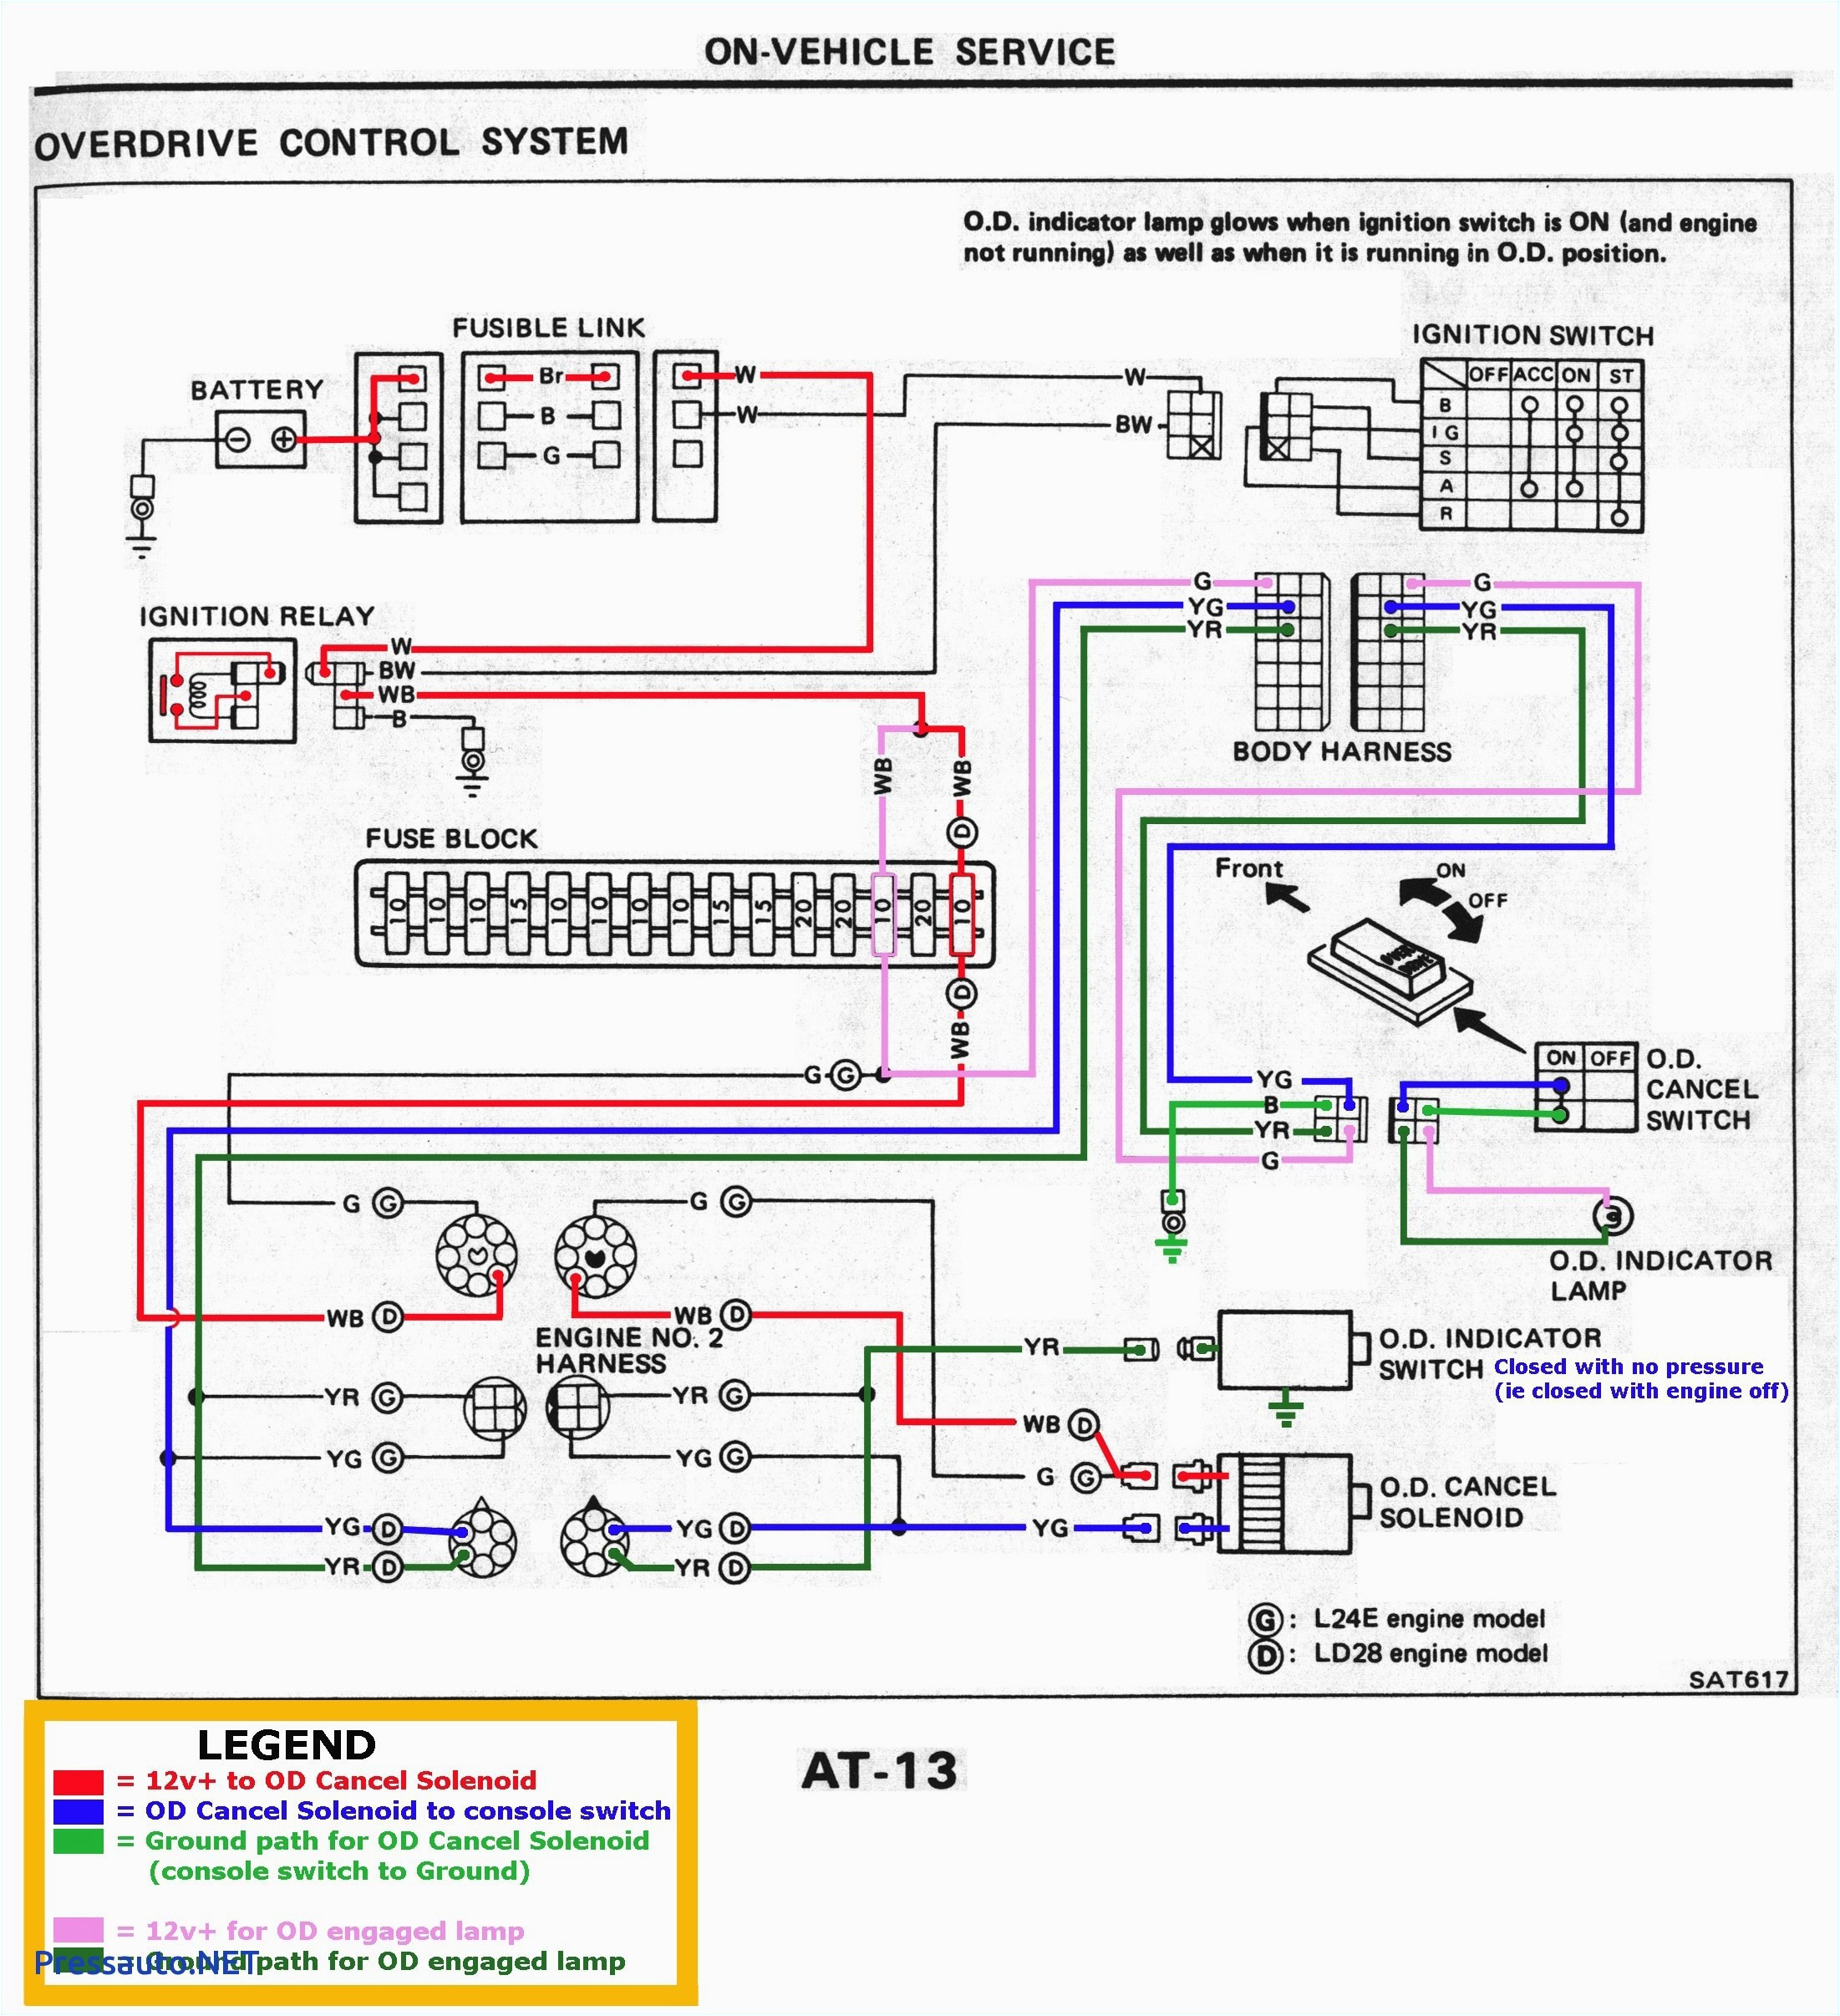 2009 Chevy Silverado Headlight Wiring Diagram Mf 282 Wiring Diagram Kgv Breitewiese De